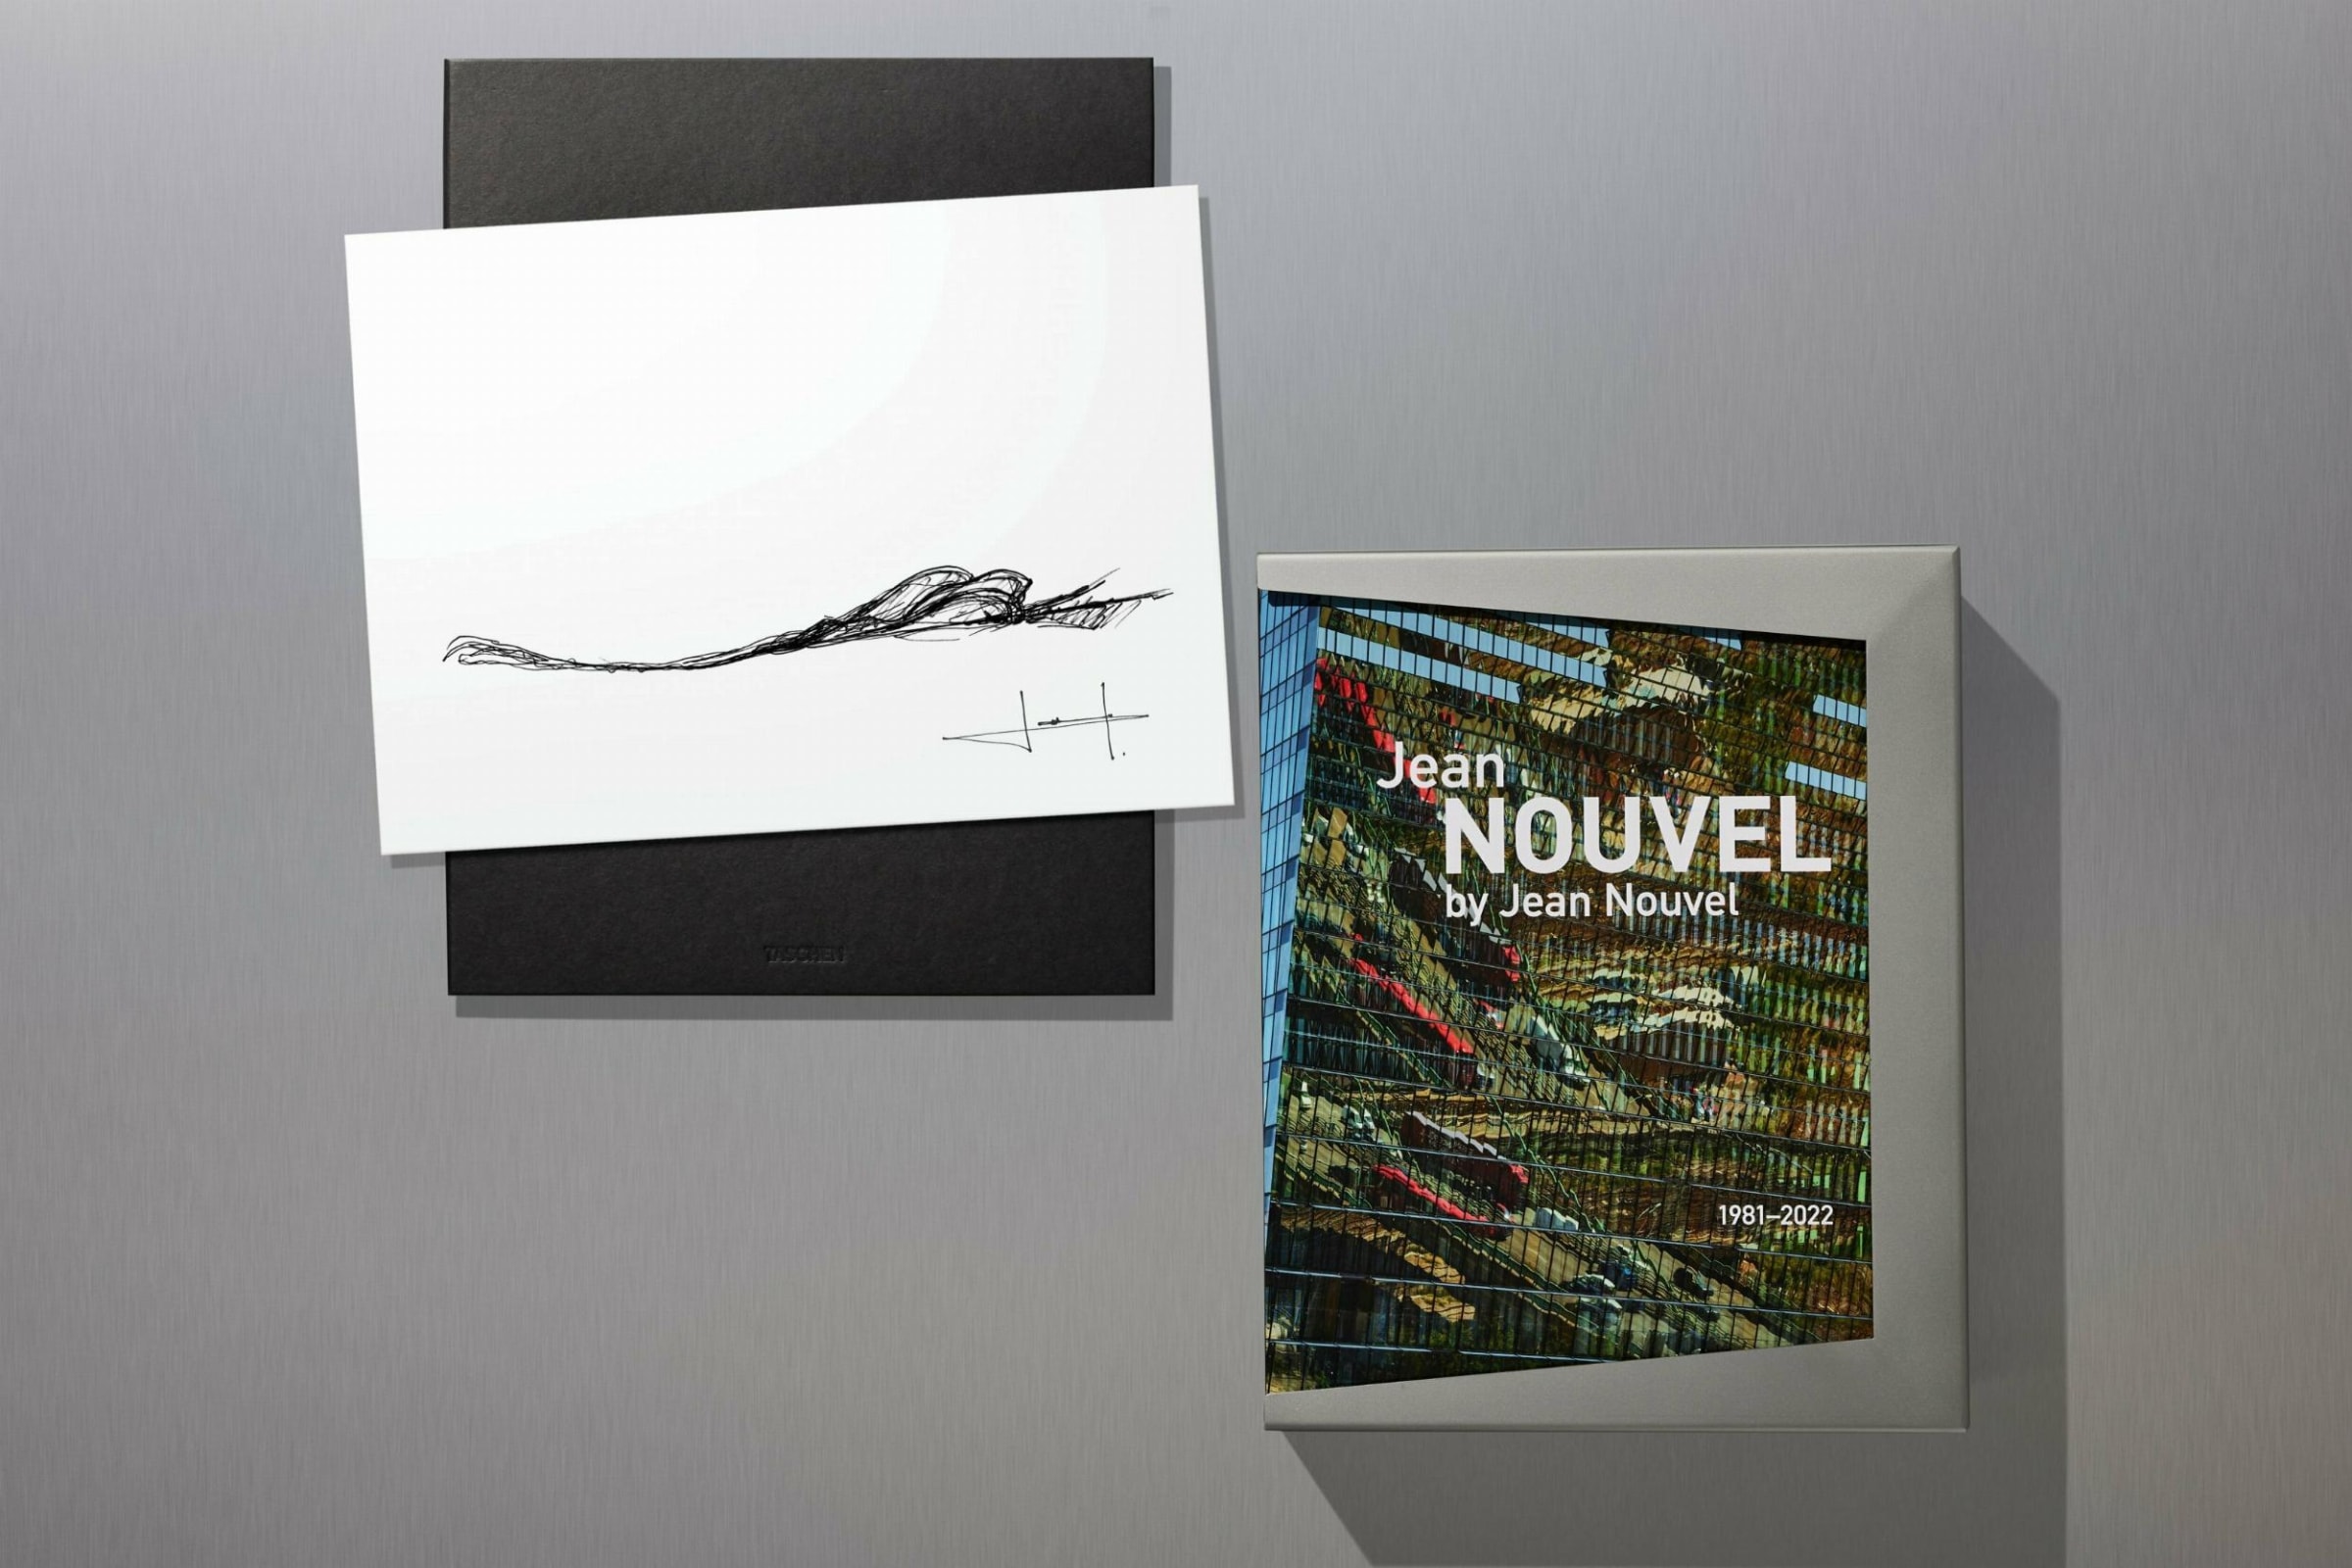 TASCHEN携手当代法国最负盛名的建筑大师之一的让·努维尔（Jean Nouvel）推出全新主题专著《Jean Nouvel by Jean Nouvel. ...